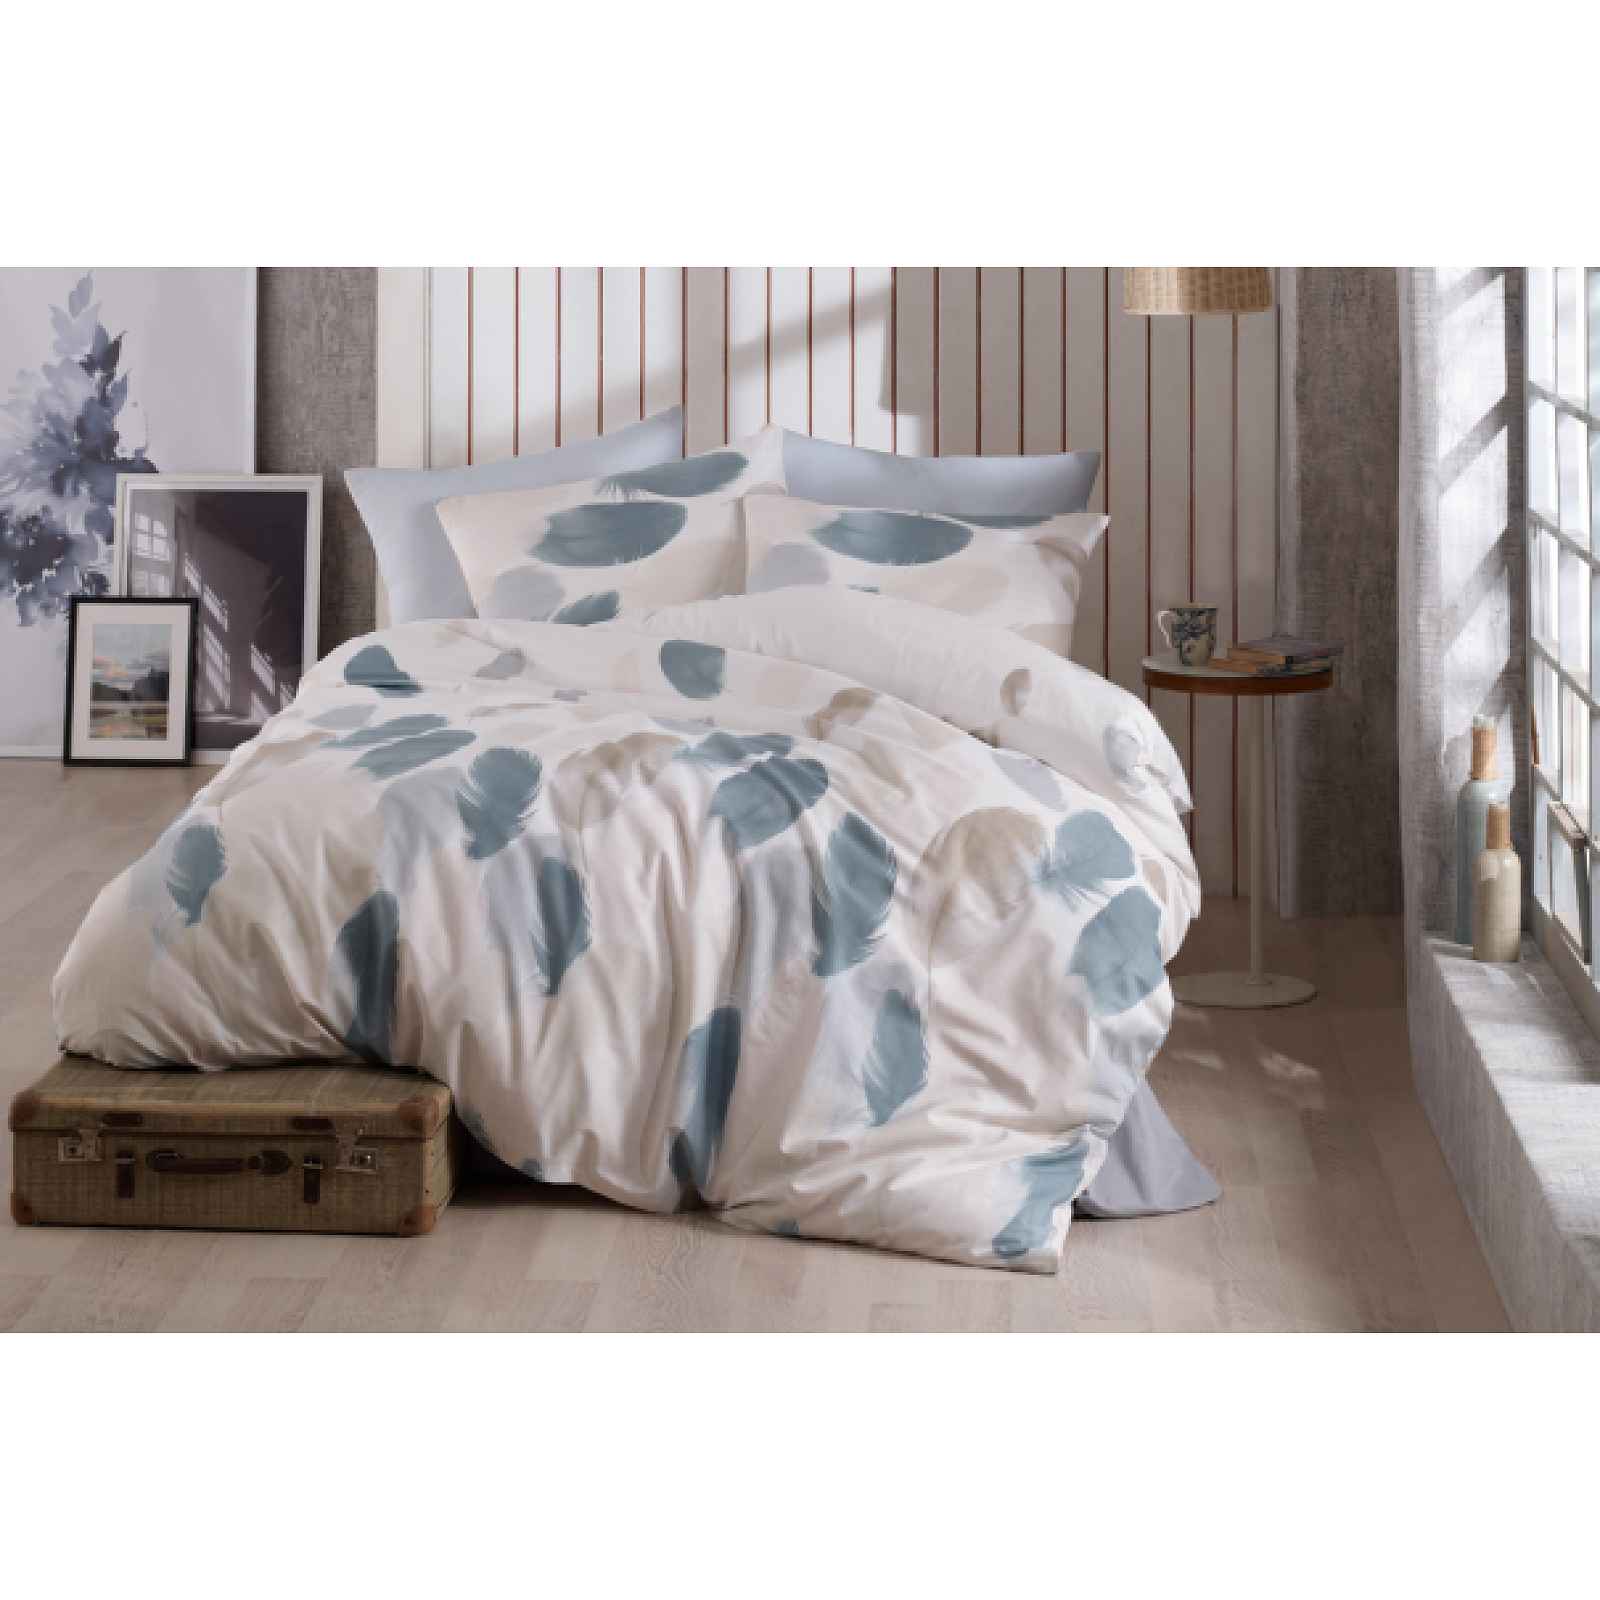 Klinmam Home povlečení Tüy V1 Grey z Renforcé bavlny s pírky, 140x200 cm + 90x70 cm